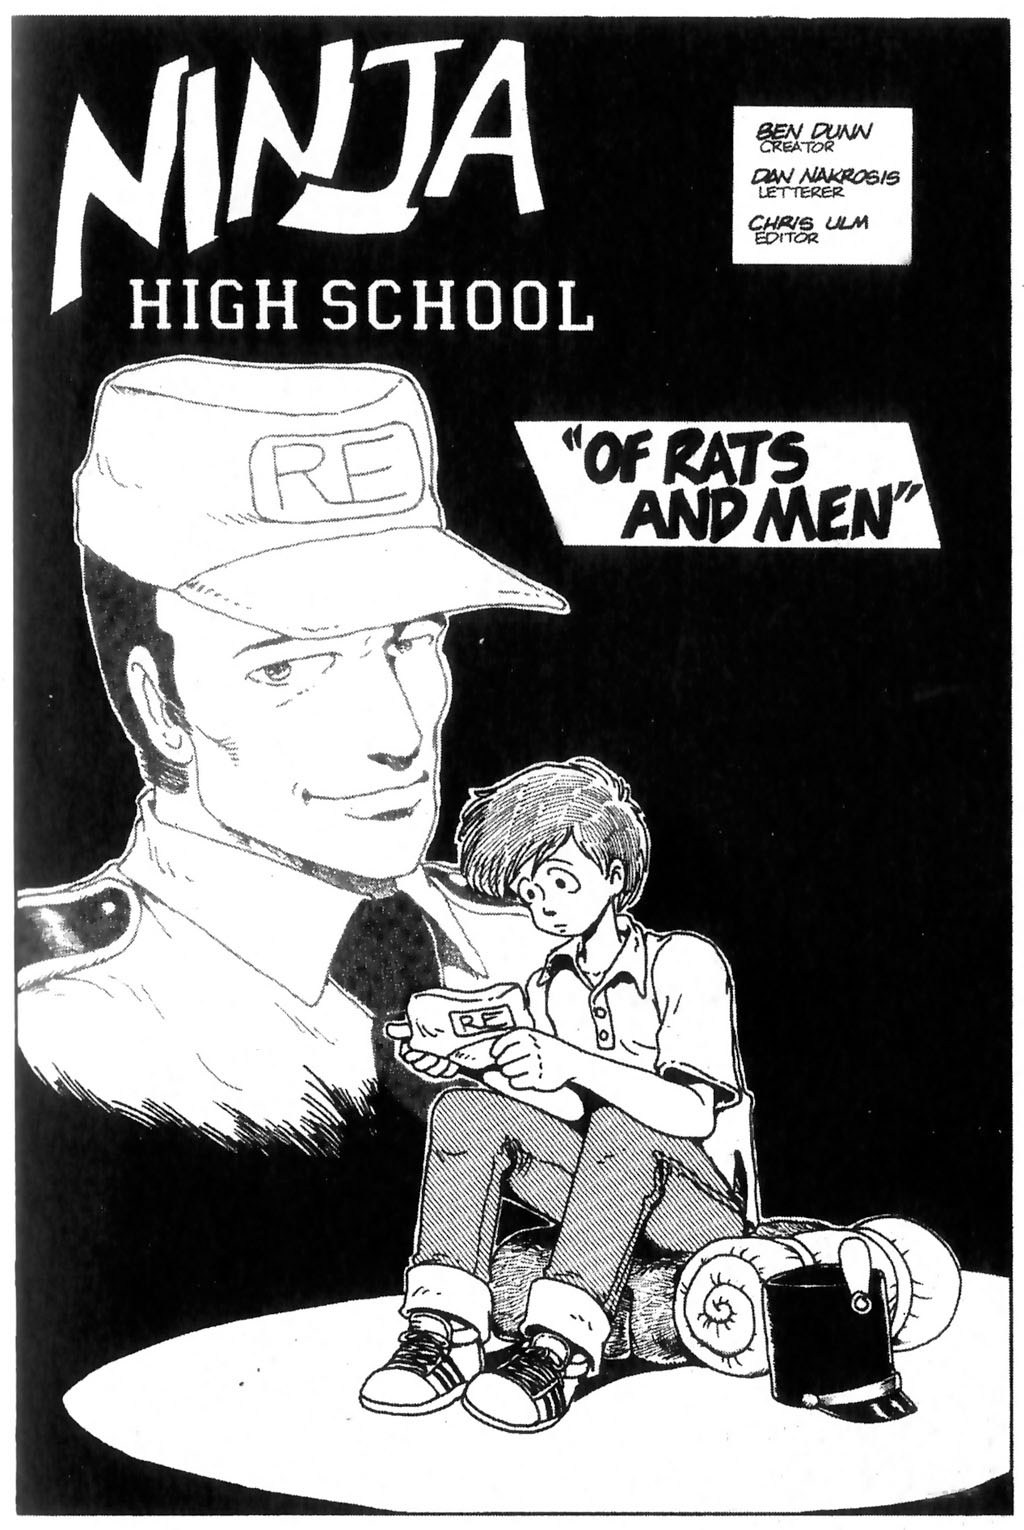 Read online Ninja High School: Of Rats & Men comic -  Issue # TPB - 78